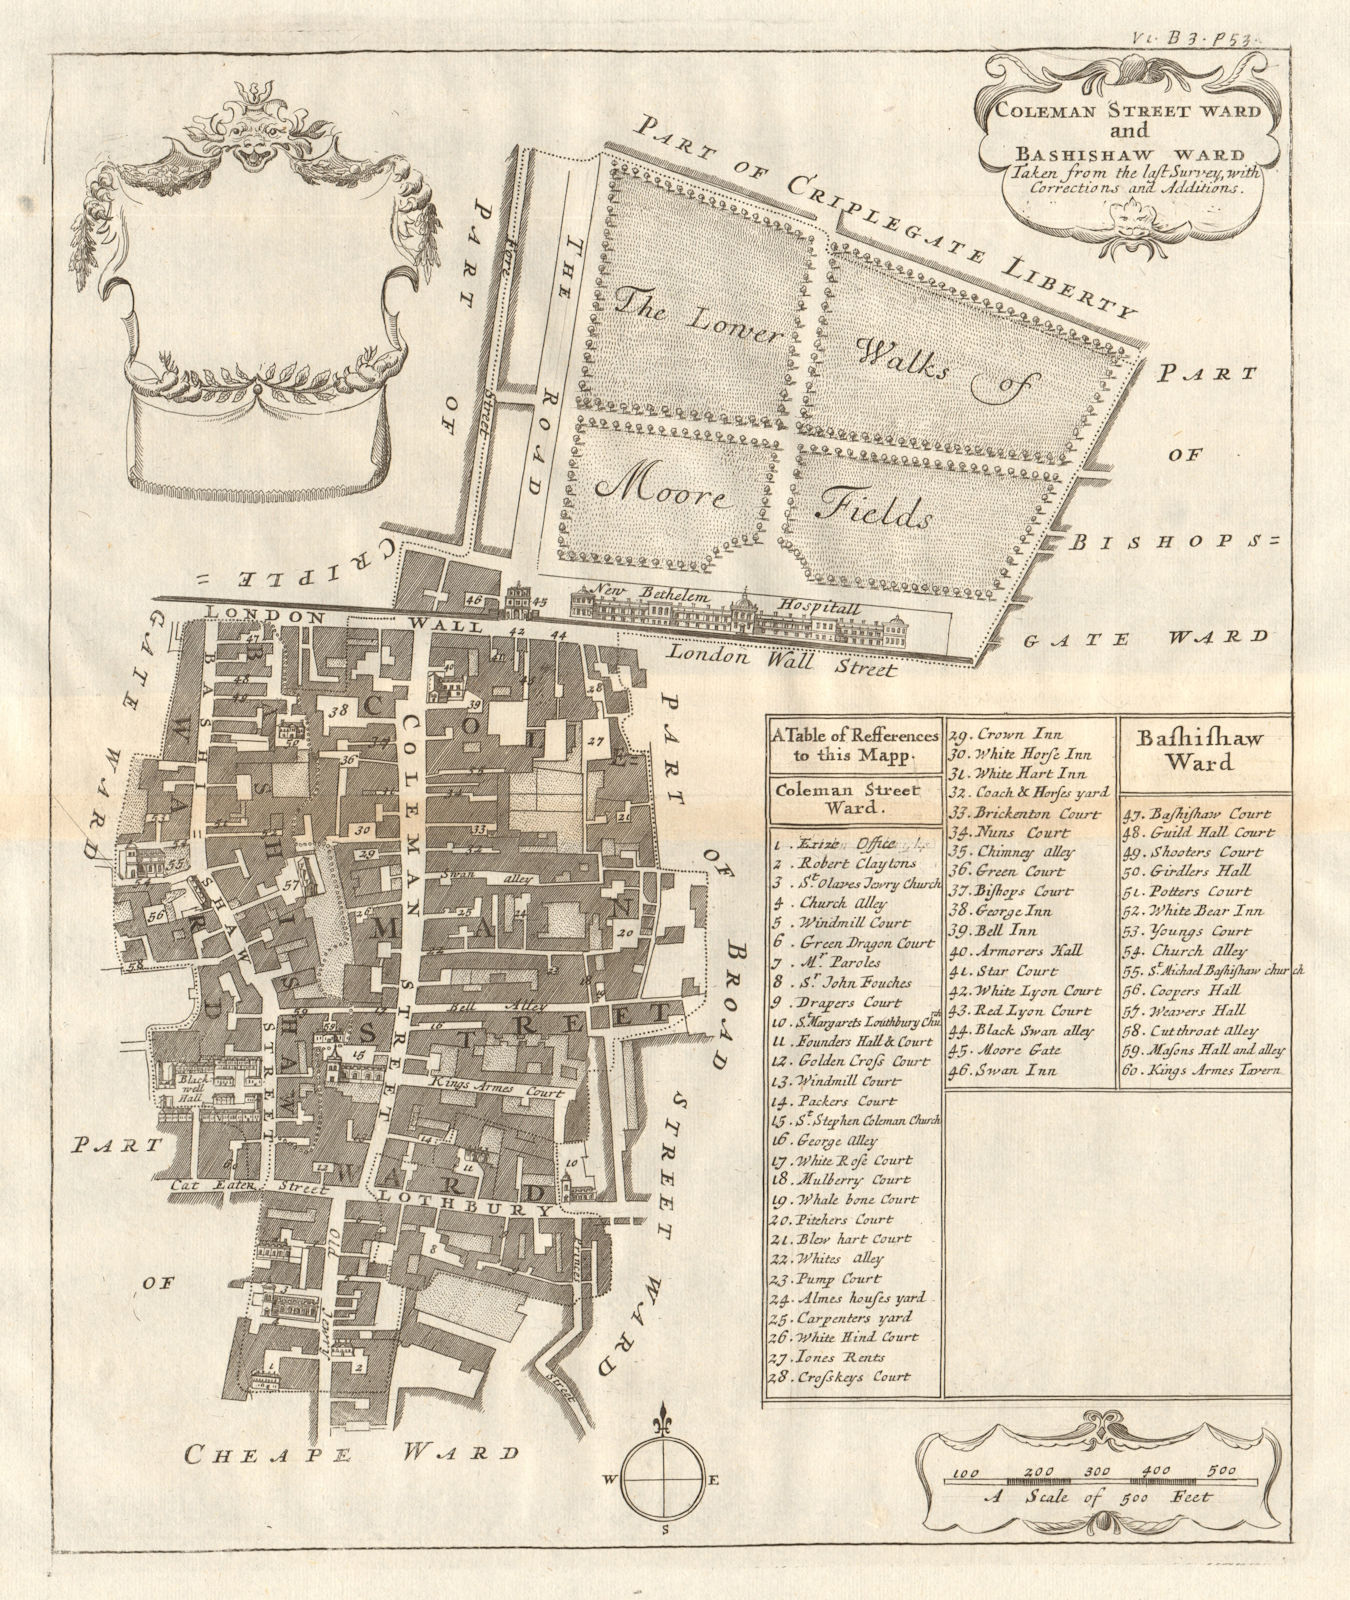 Coleman Street & Bashishaw Wards. Lothbury. City of London. STOW/STRYPE 1720 map